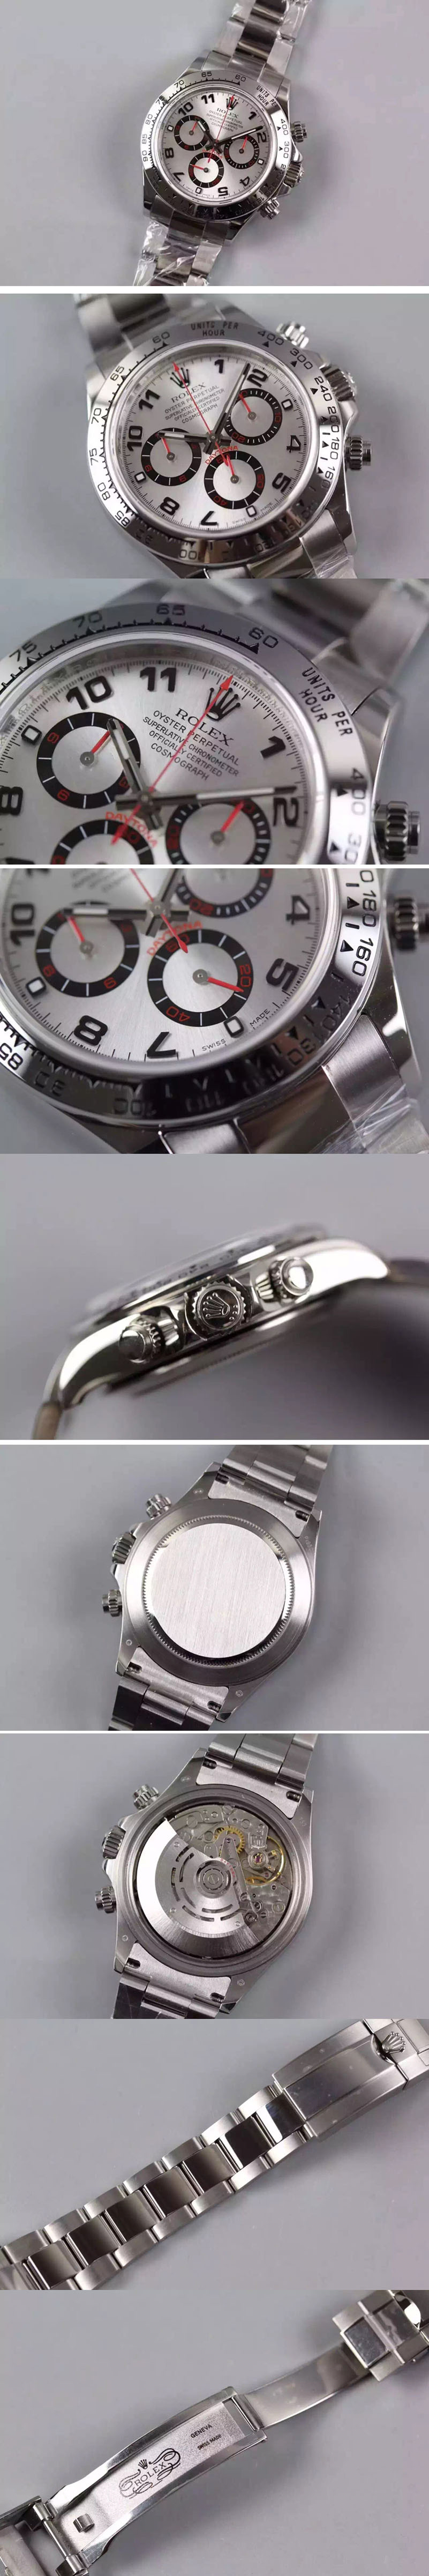 Replica Rolex Daytona Watches